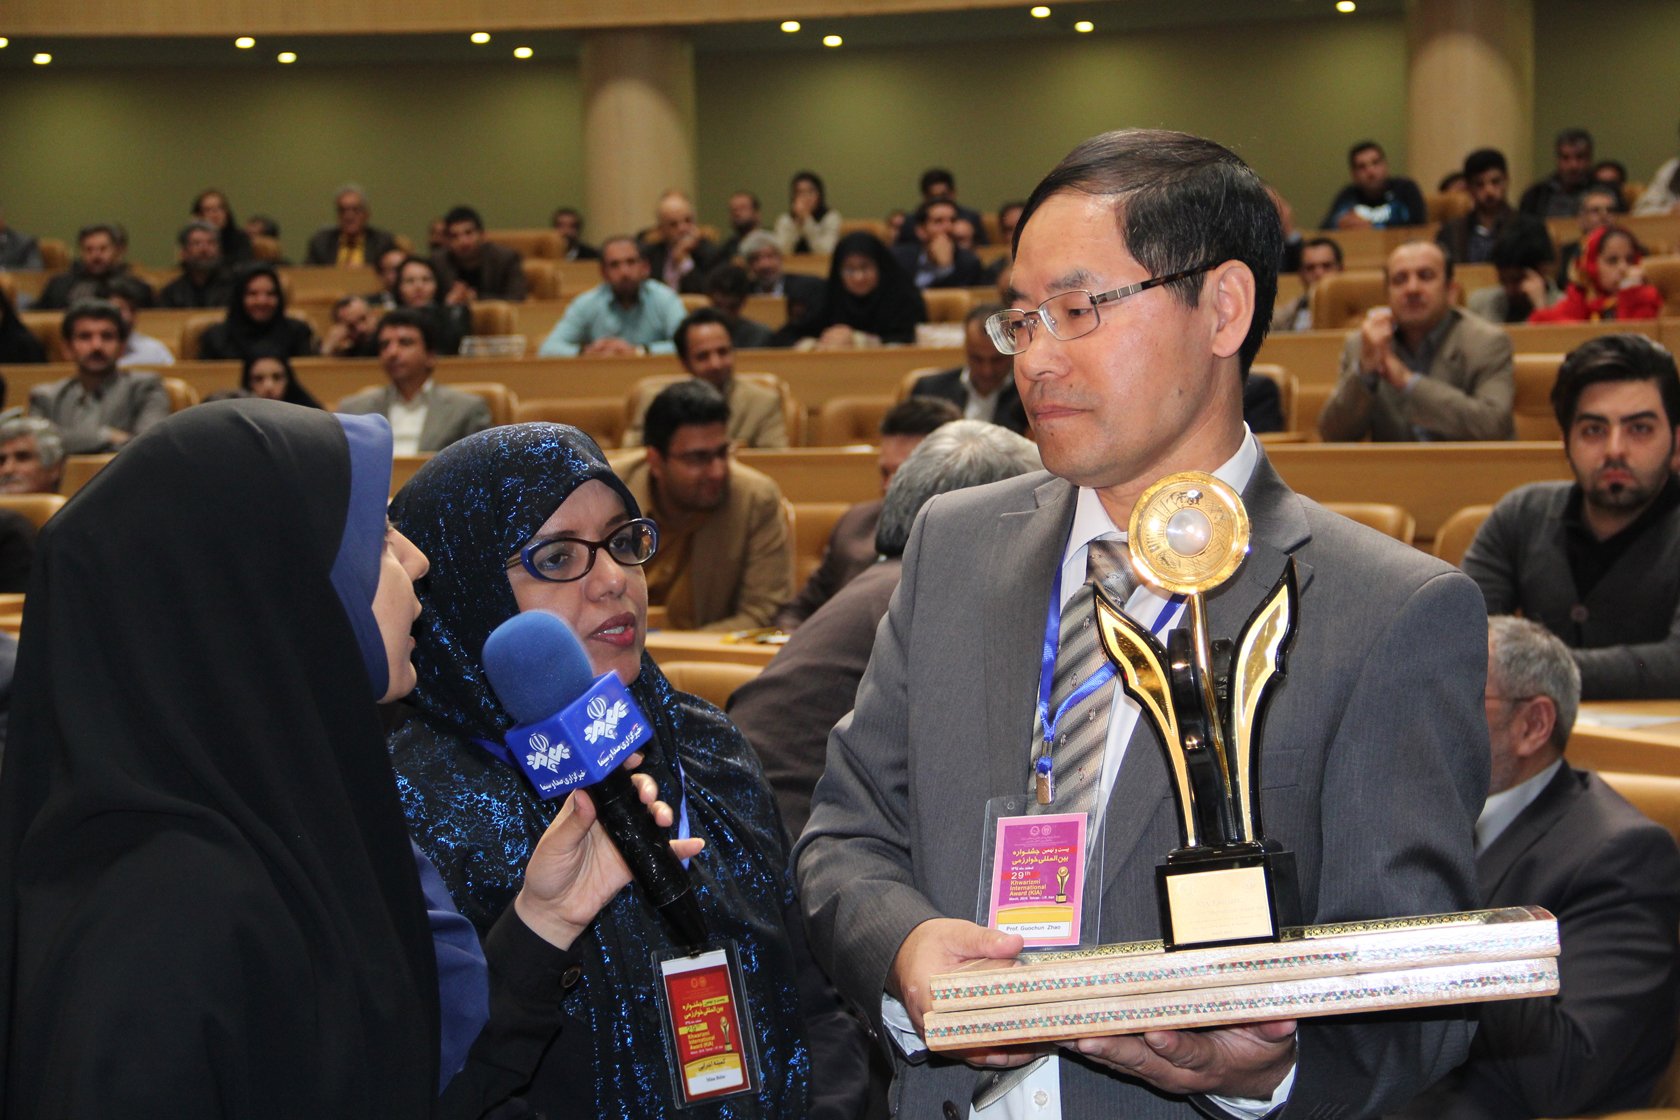 Iranian media interviews Professor Zhao after the Ceremony. Image courtesy: Khwarizmi International Award